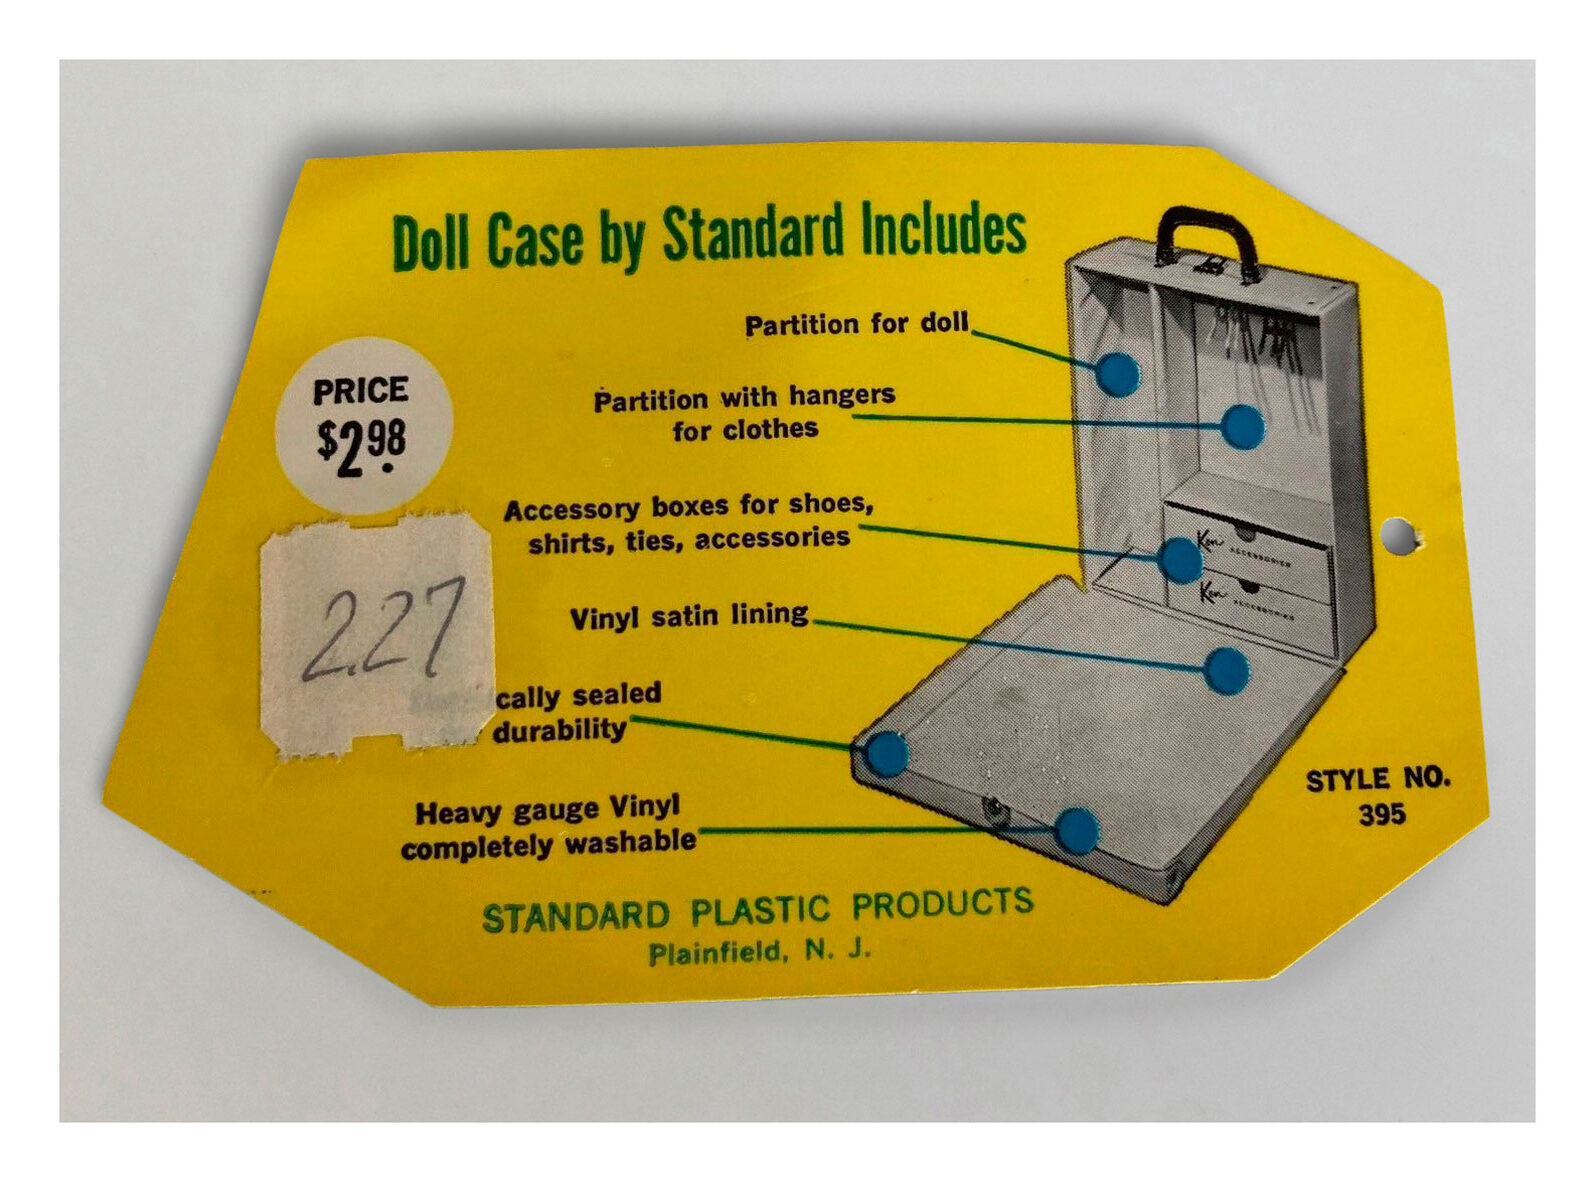 1962 Ken Doll Case tag